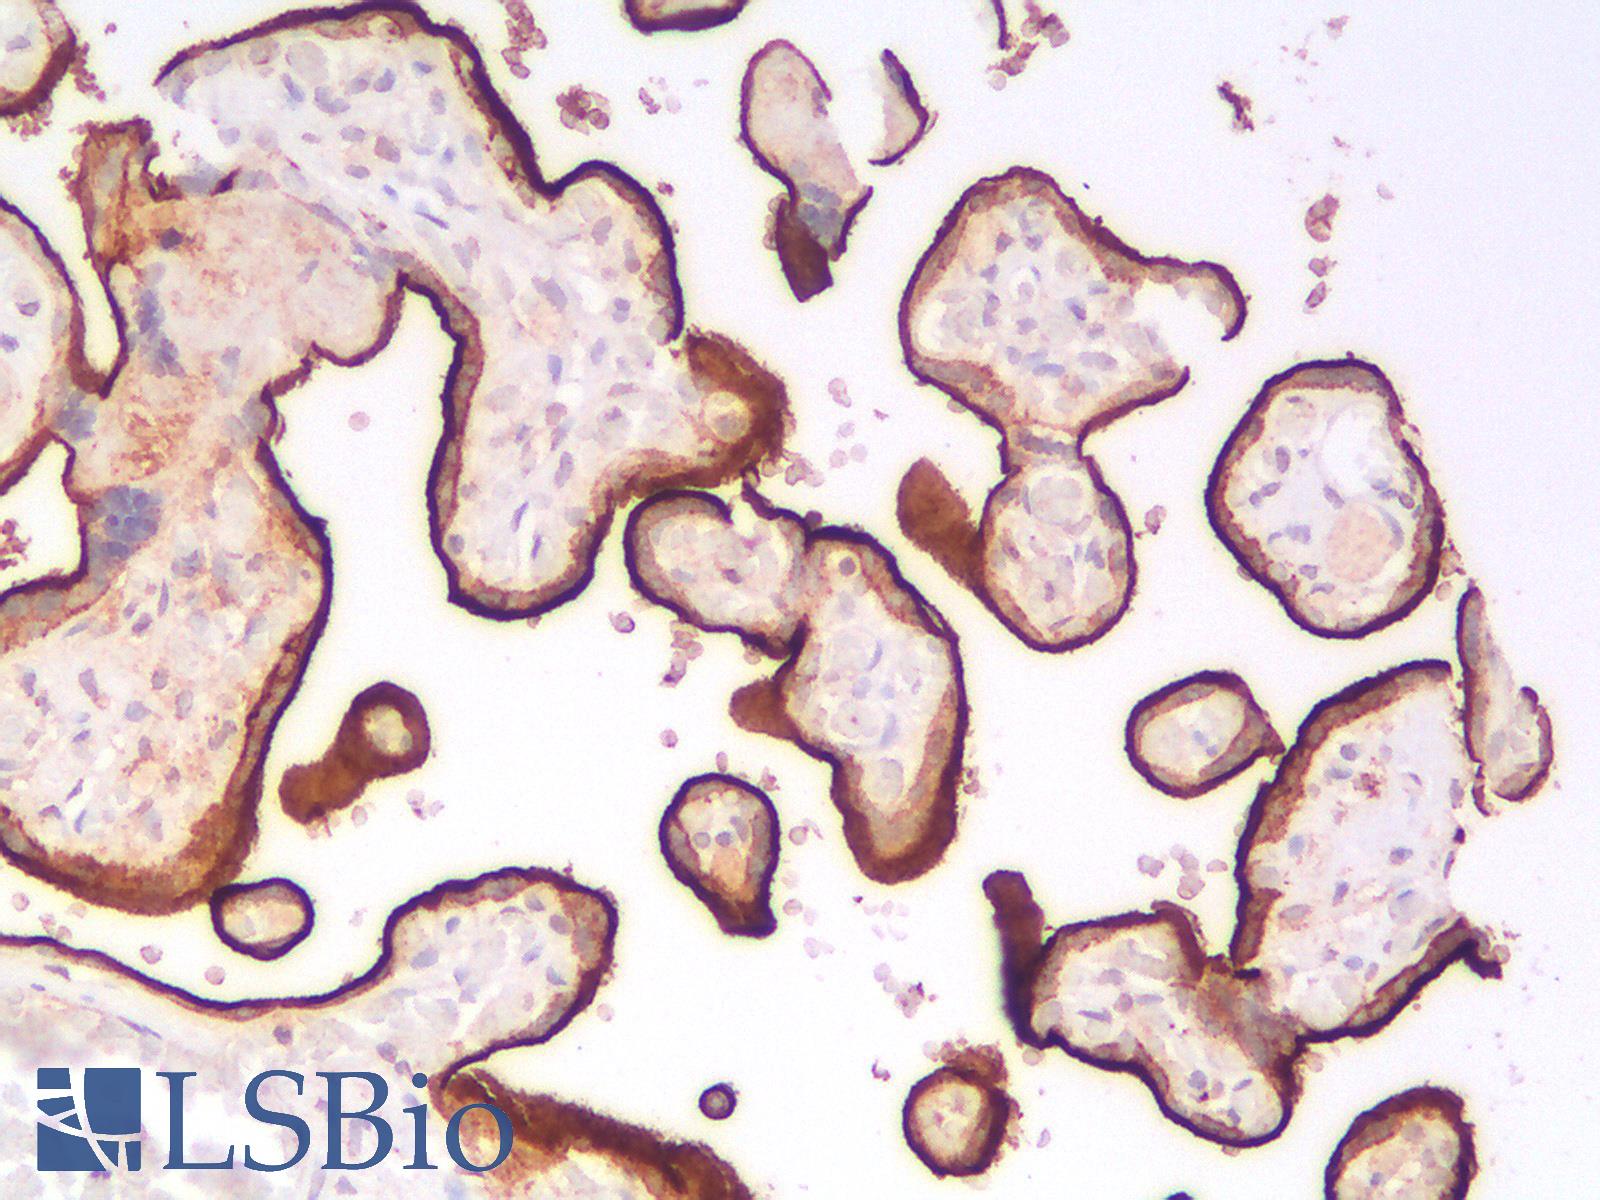 EMA / MUC1 Antibody - Human Placenta: Formalin-Fixed, Paraffin-Embedded (FFPE)